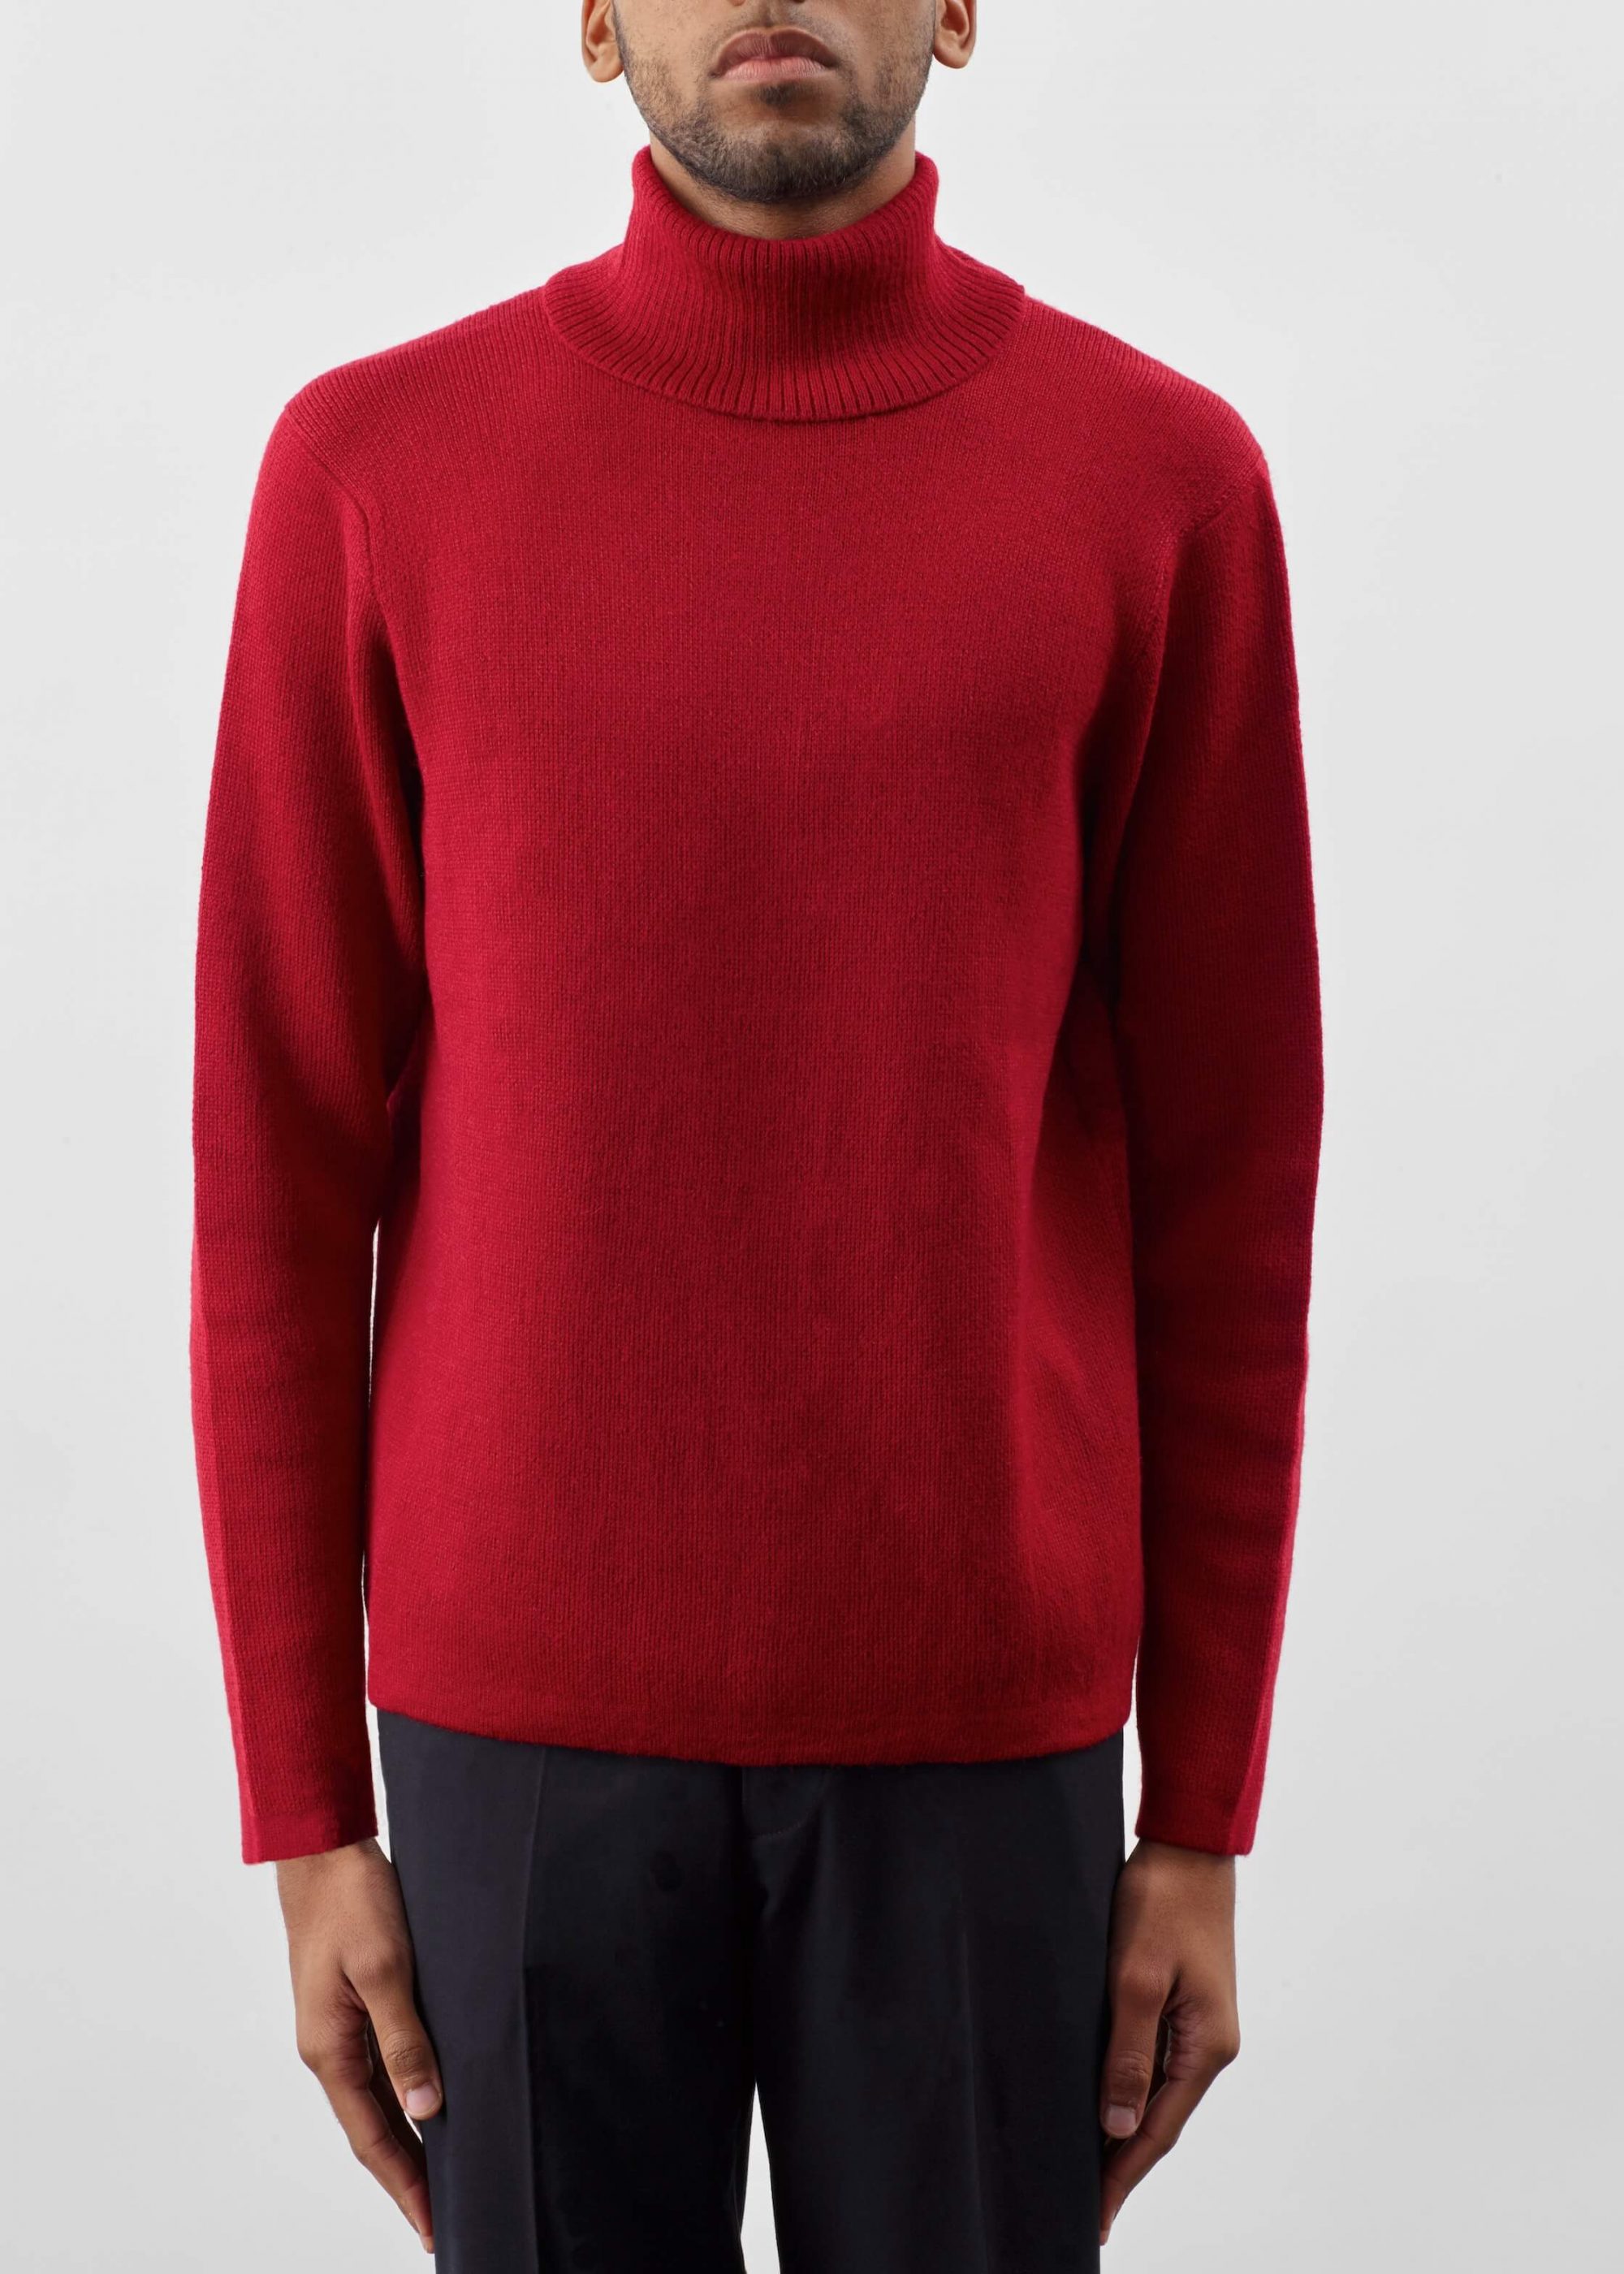 Product image for »Sagan« Turtleneck Sweater Baby Alpaka | Red